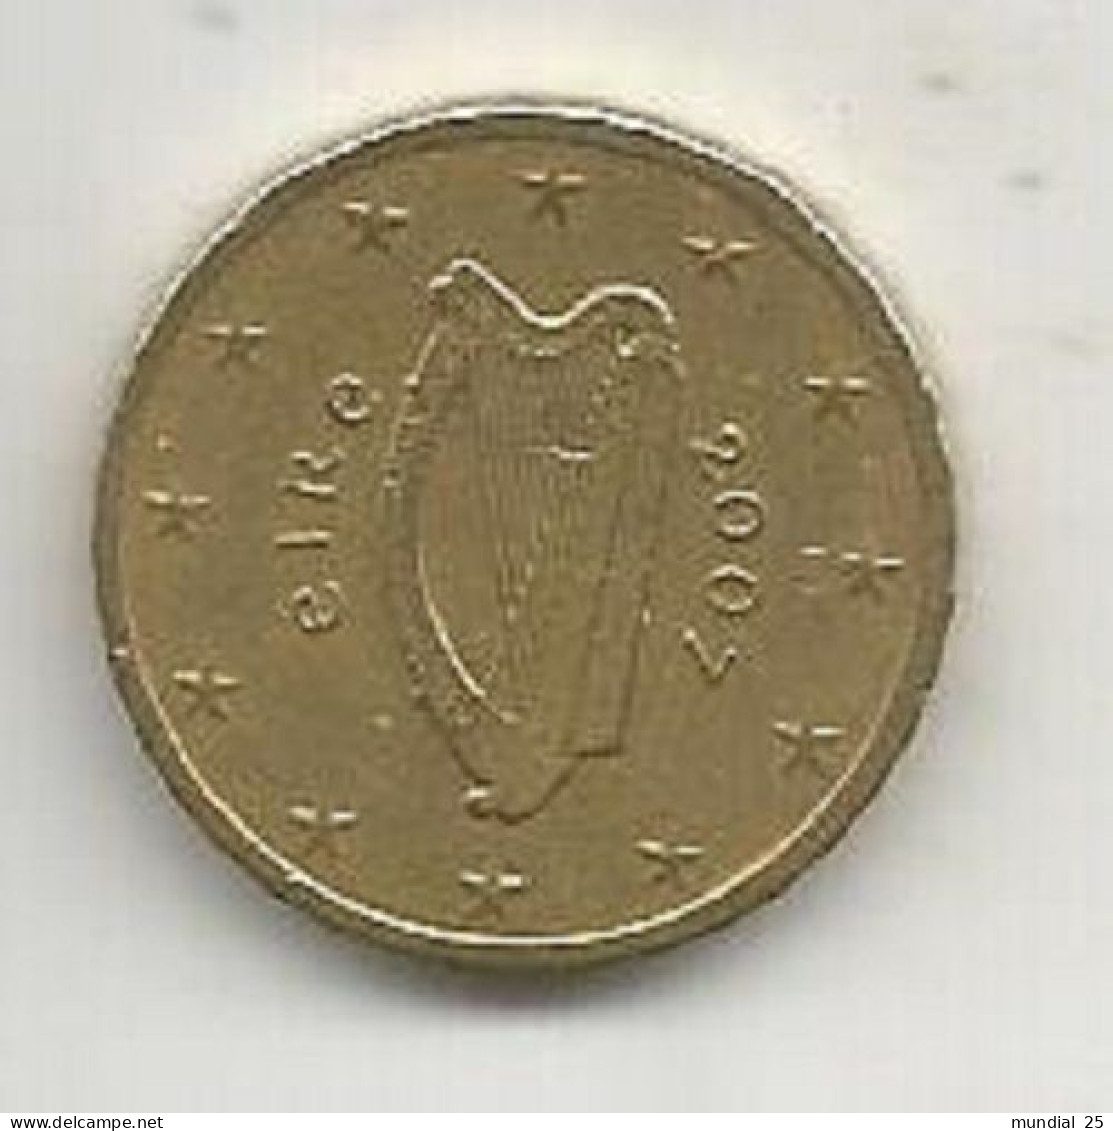 IRELAND 10 EURO CENT 2007 - Ireland